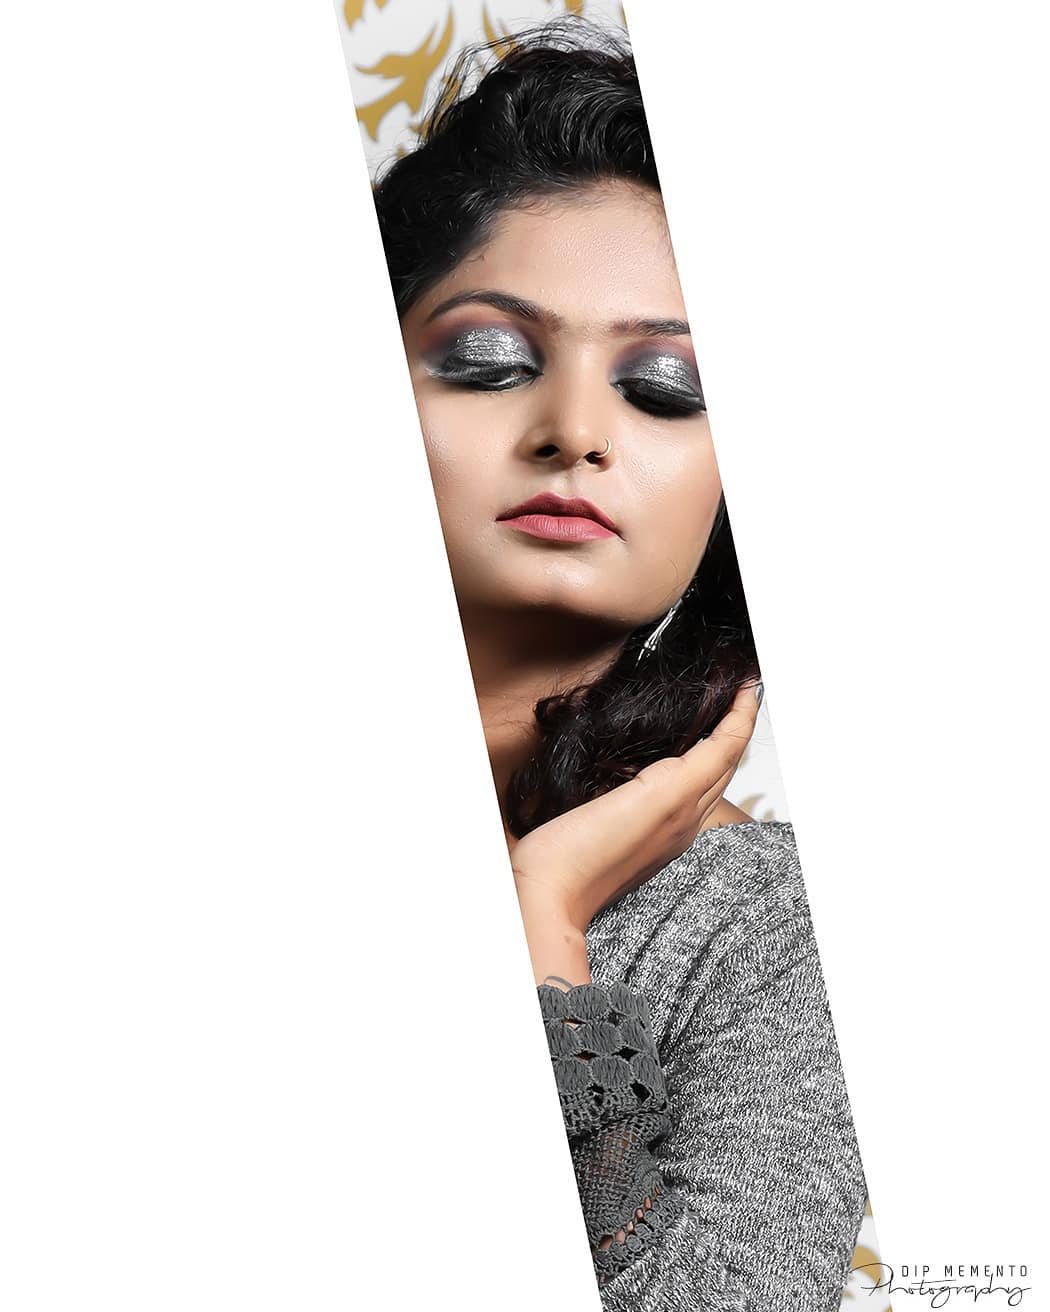 MUA : @dishabeautysaloonacademynikol
Shoot by : @dip_memento_photography
Face: @divyagoshwami .
.
#portraits #dslrofficial #indianphotographers 
#portraitsindia #canon #colorsofindia
#photosofindia 
#fashion
#photographersofindia
#portraitsindia #fashionblogger #dipmementophotography
#makeupartist #photography #portraitvision #portraitmood #indianportraits #colorsofindia #portraitphotography #ahmedabad #indianpictures 
#portraitmood #portraits_india #bokehphotography #bongportrait #bokehphotography #yesindia